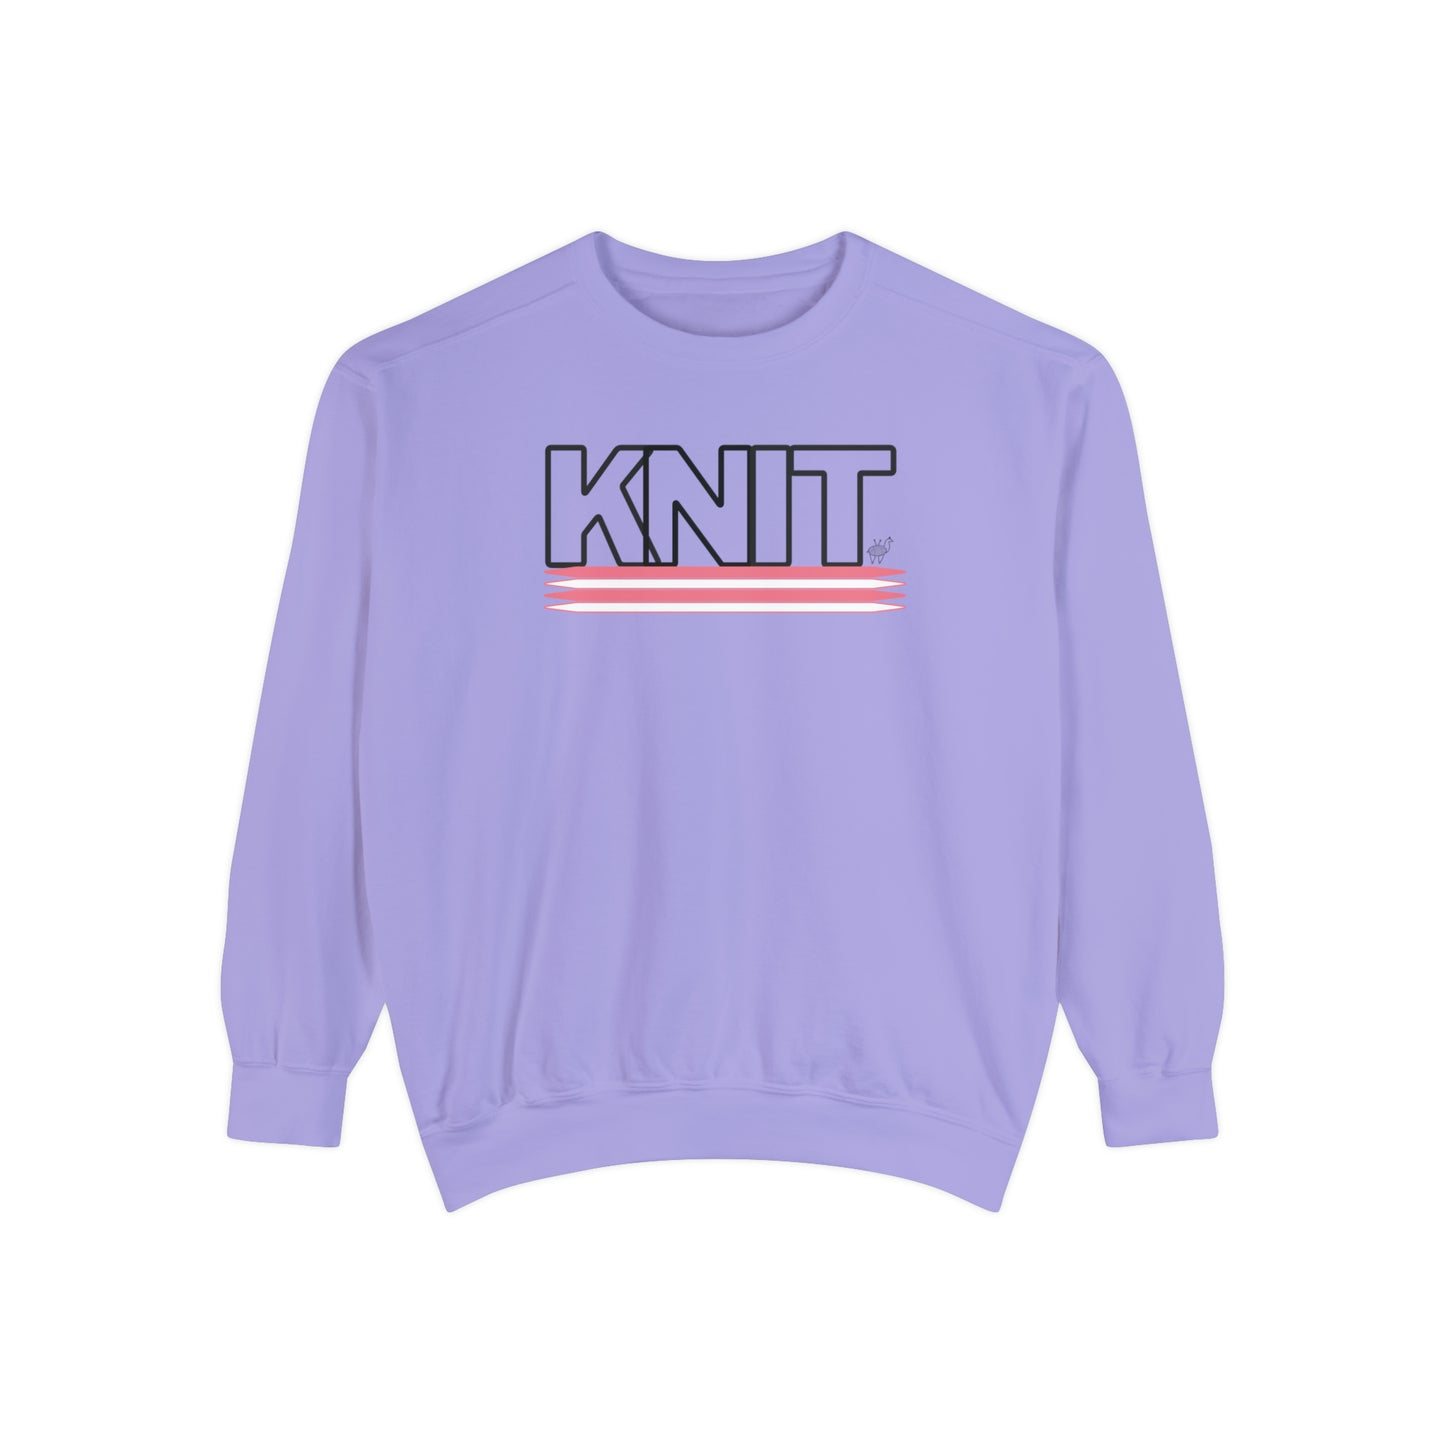 KNIT Sweater